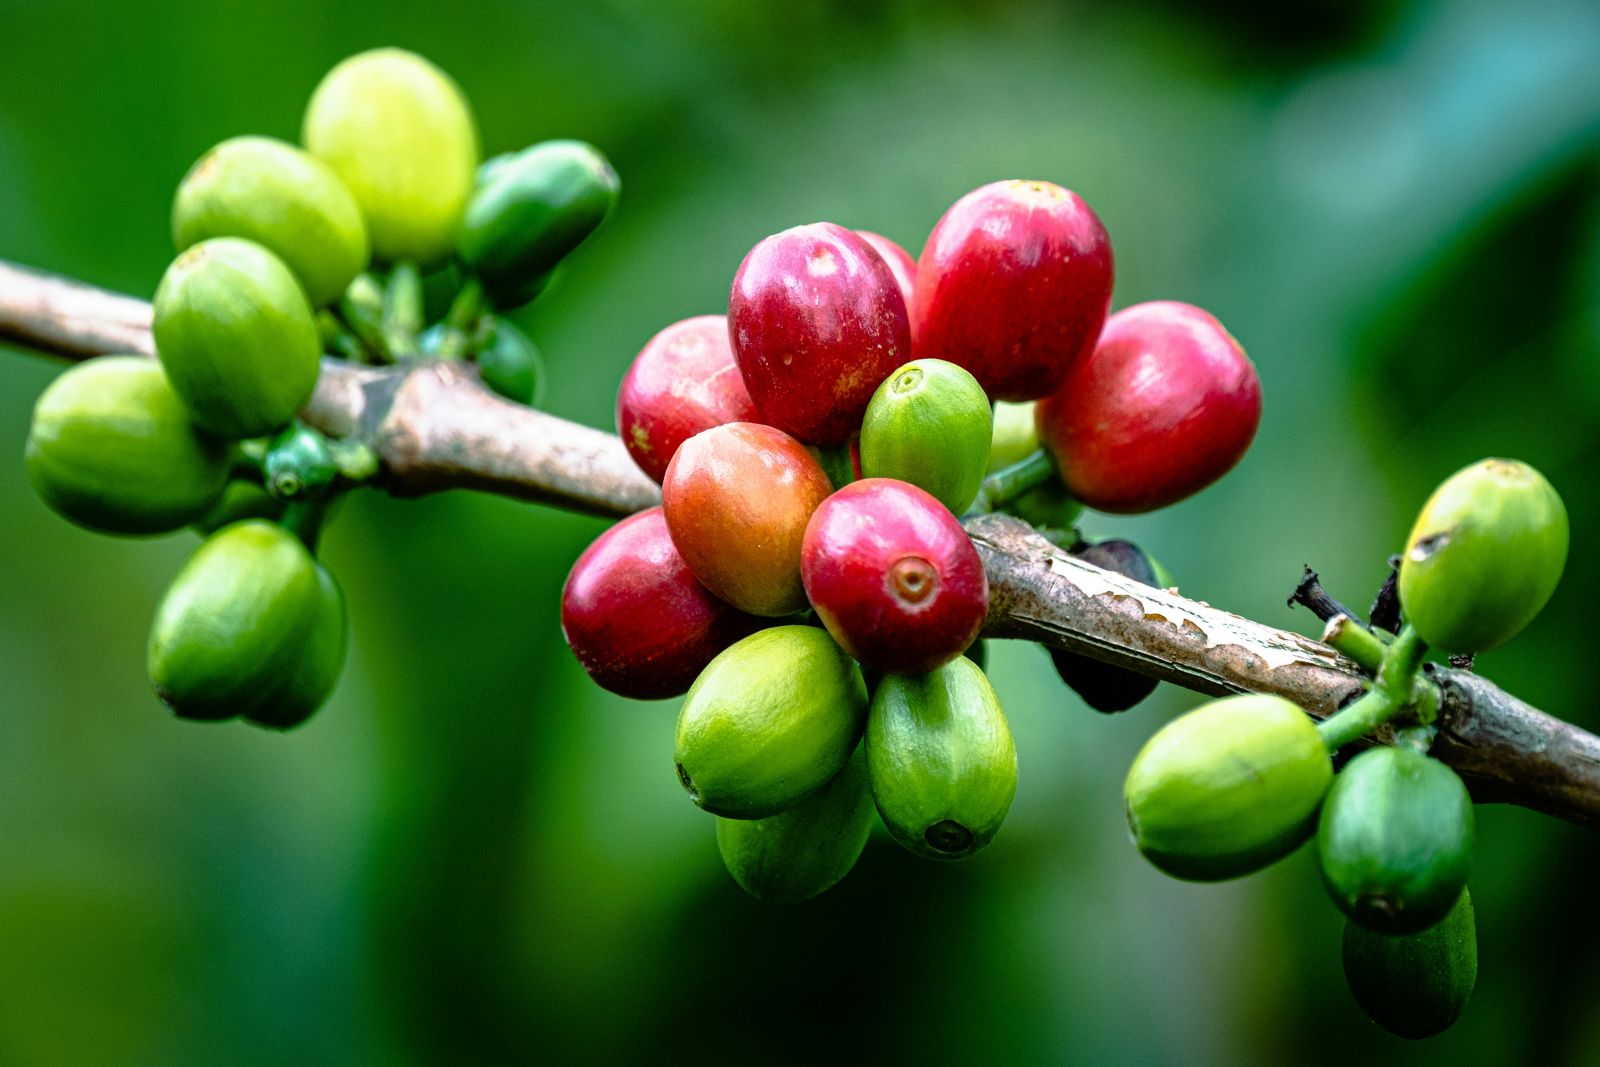 Coffee - Coffee fruit on branch by Dimitry B via Unsplash